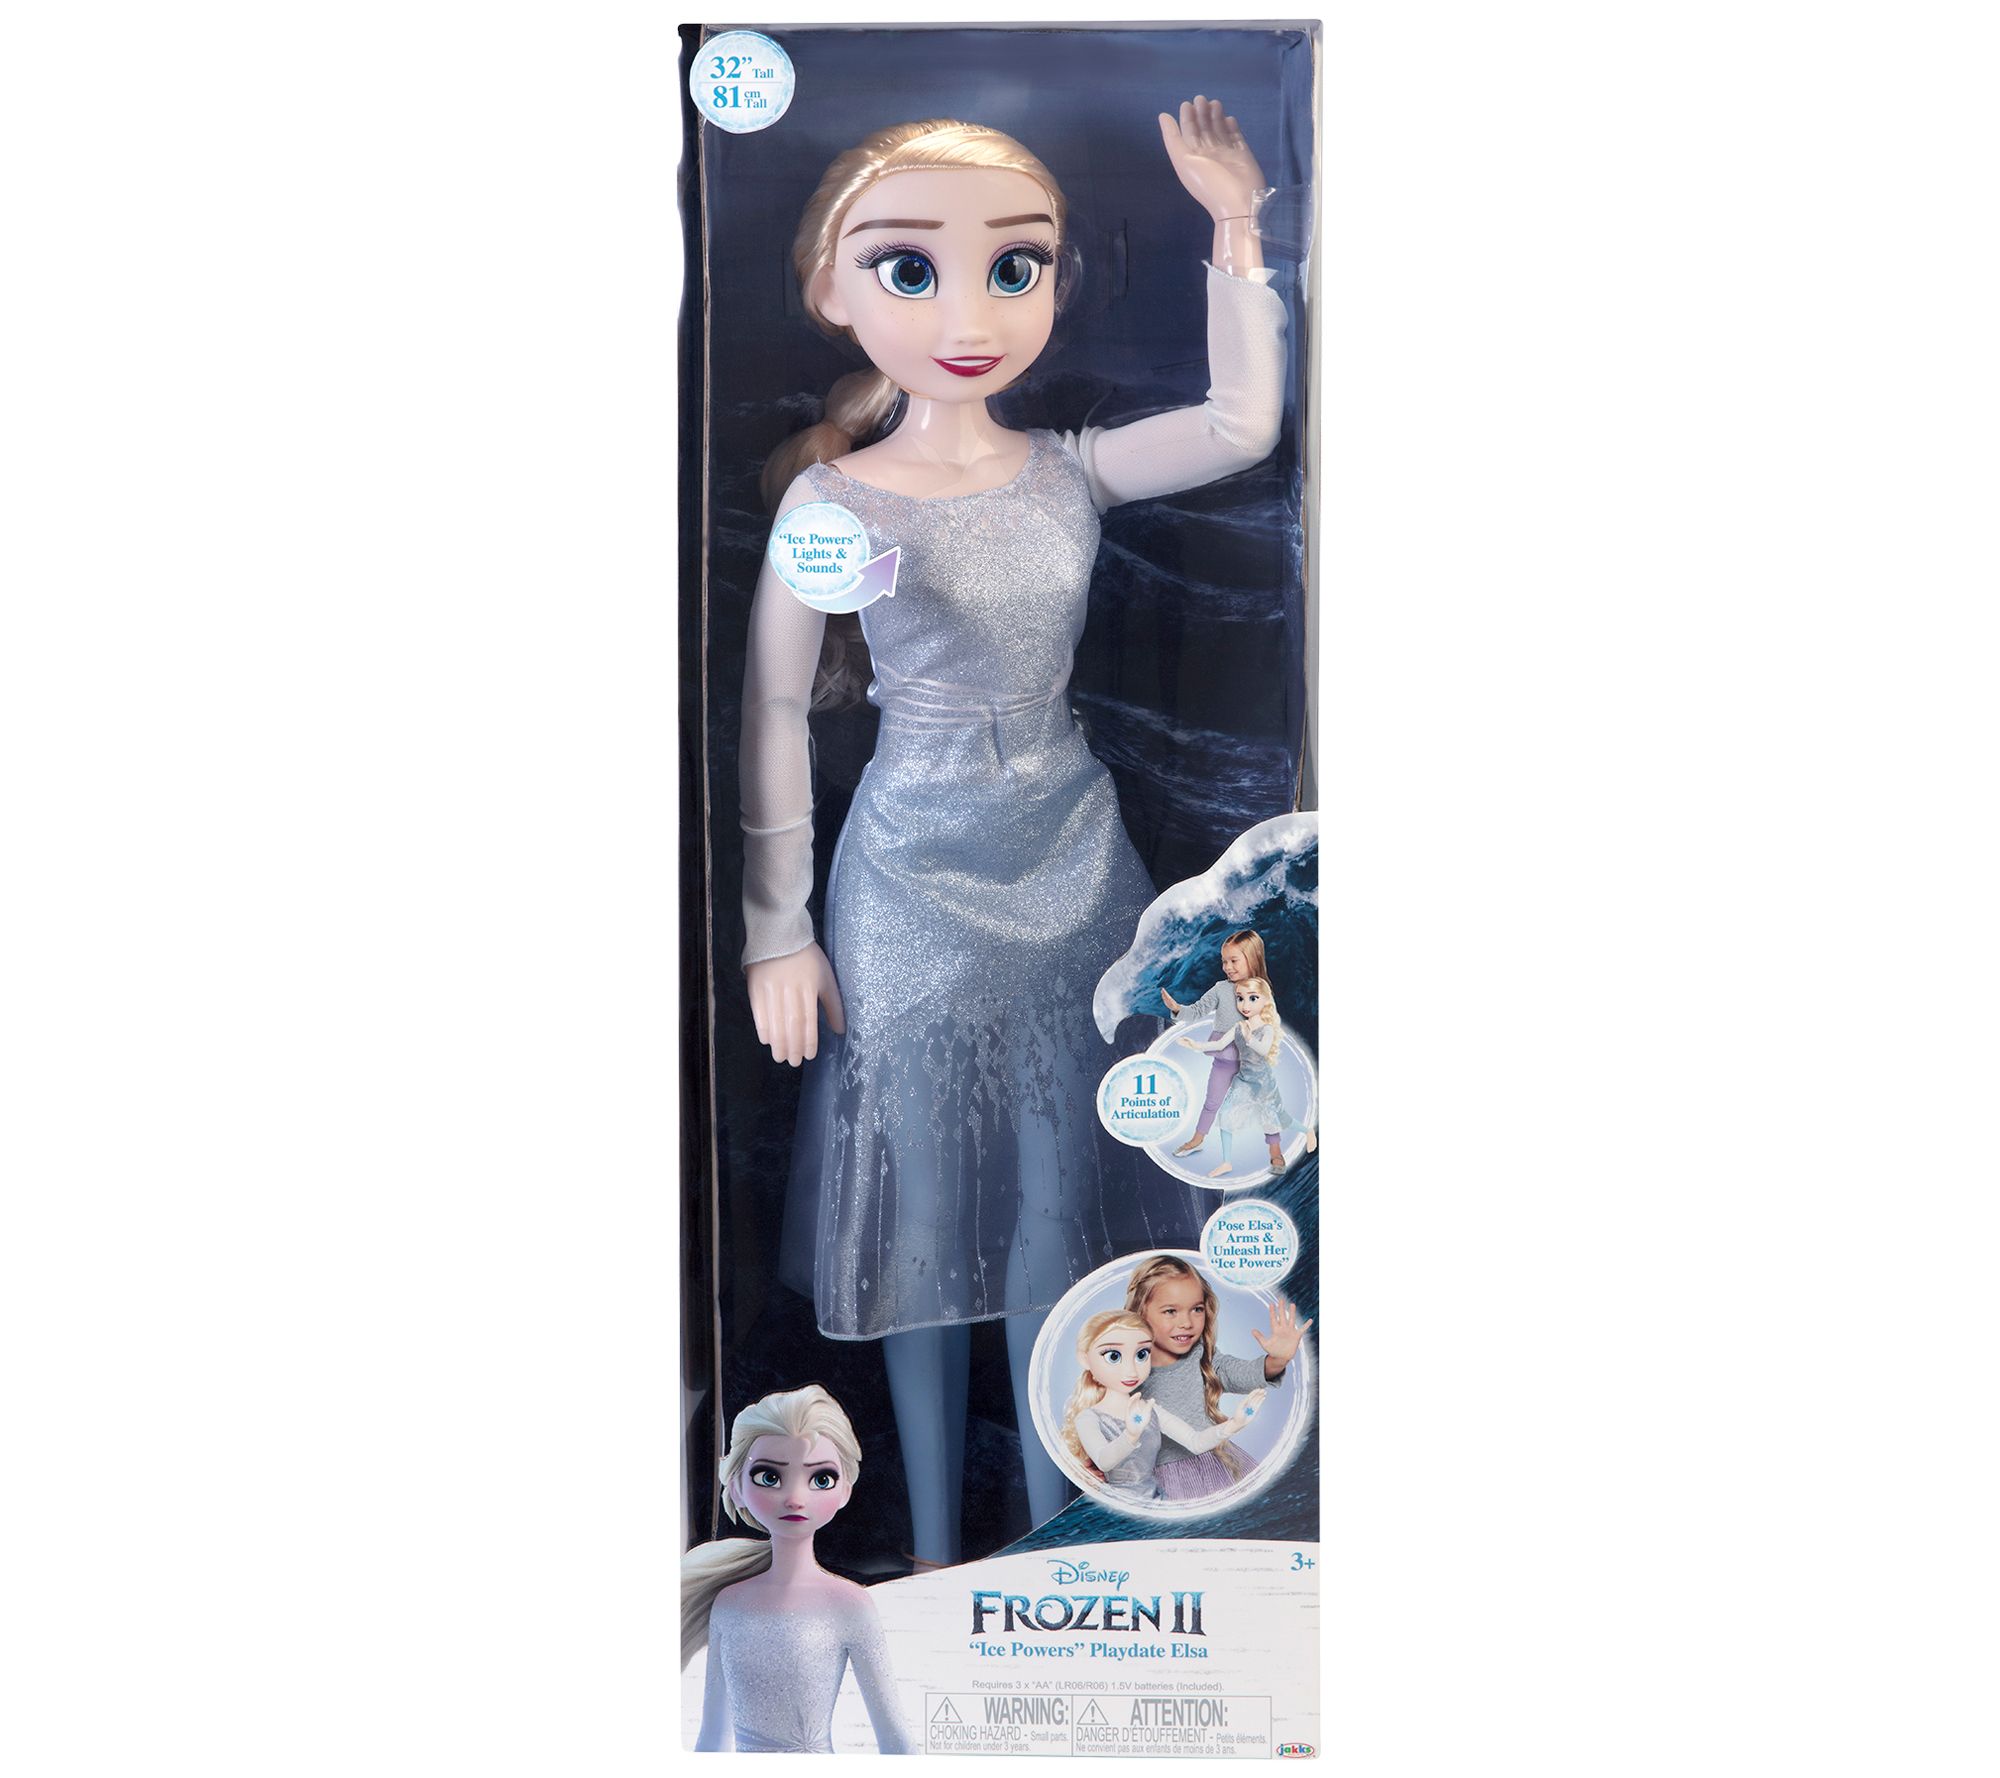 Disney Frozen 2 : Elsa Singing Doll 12 (Disney Store)